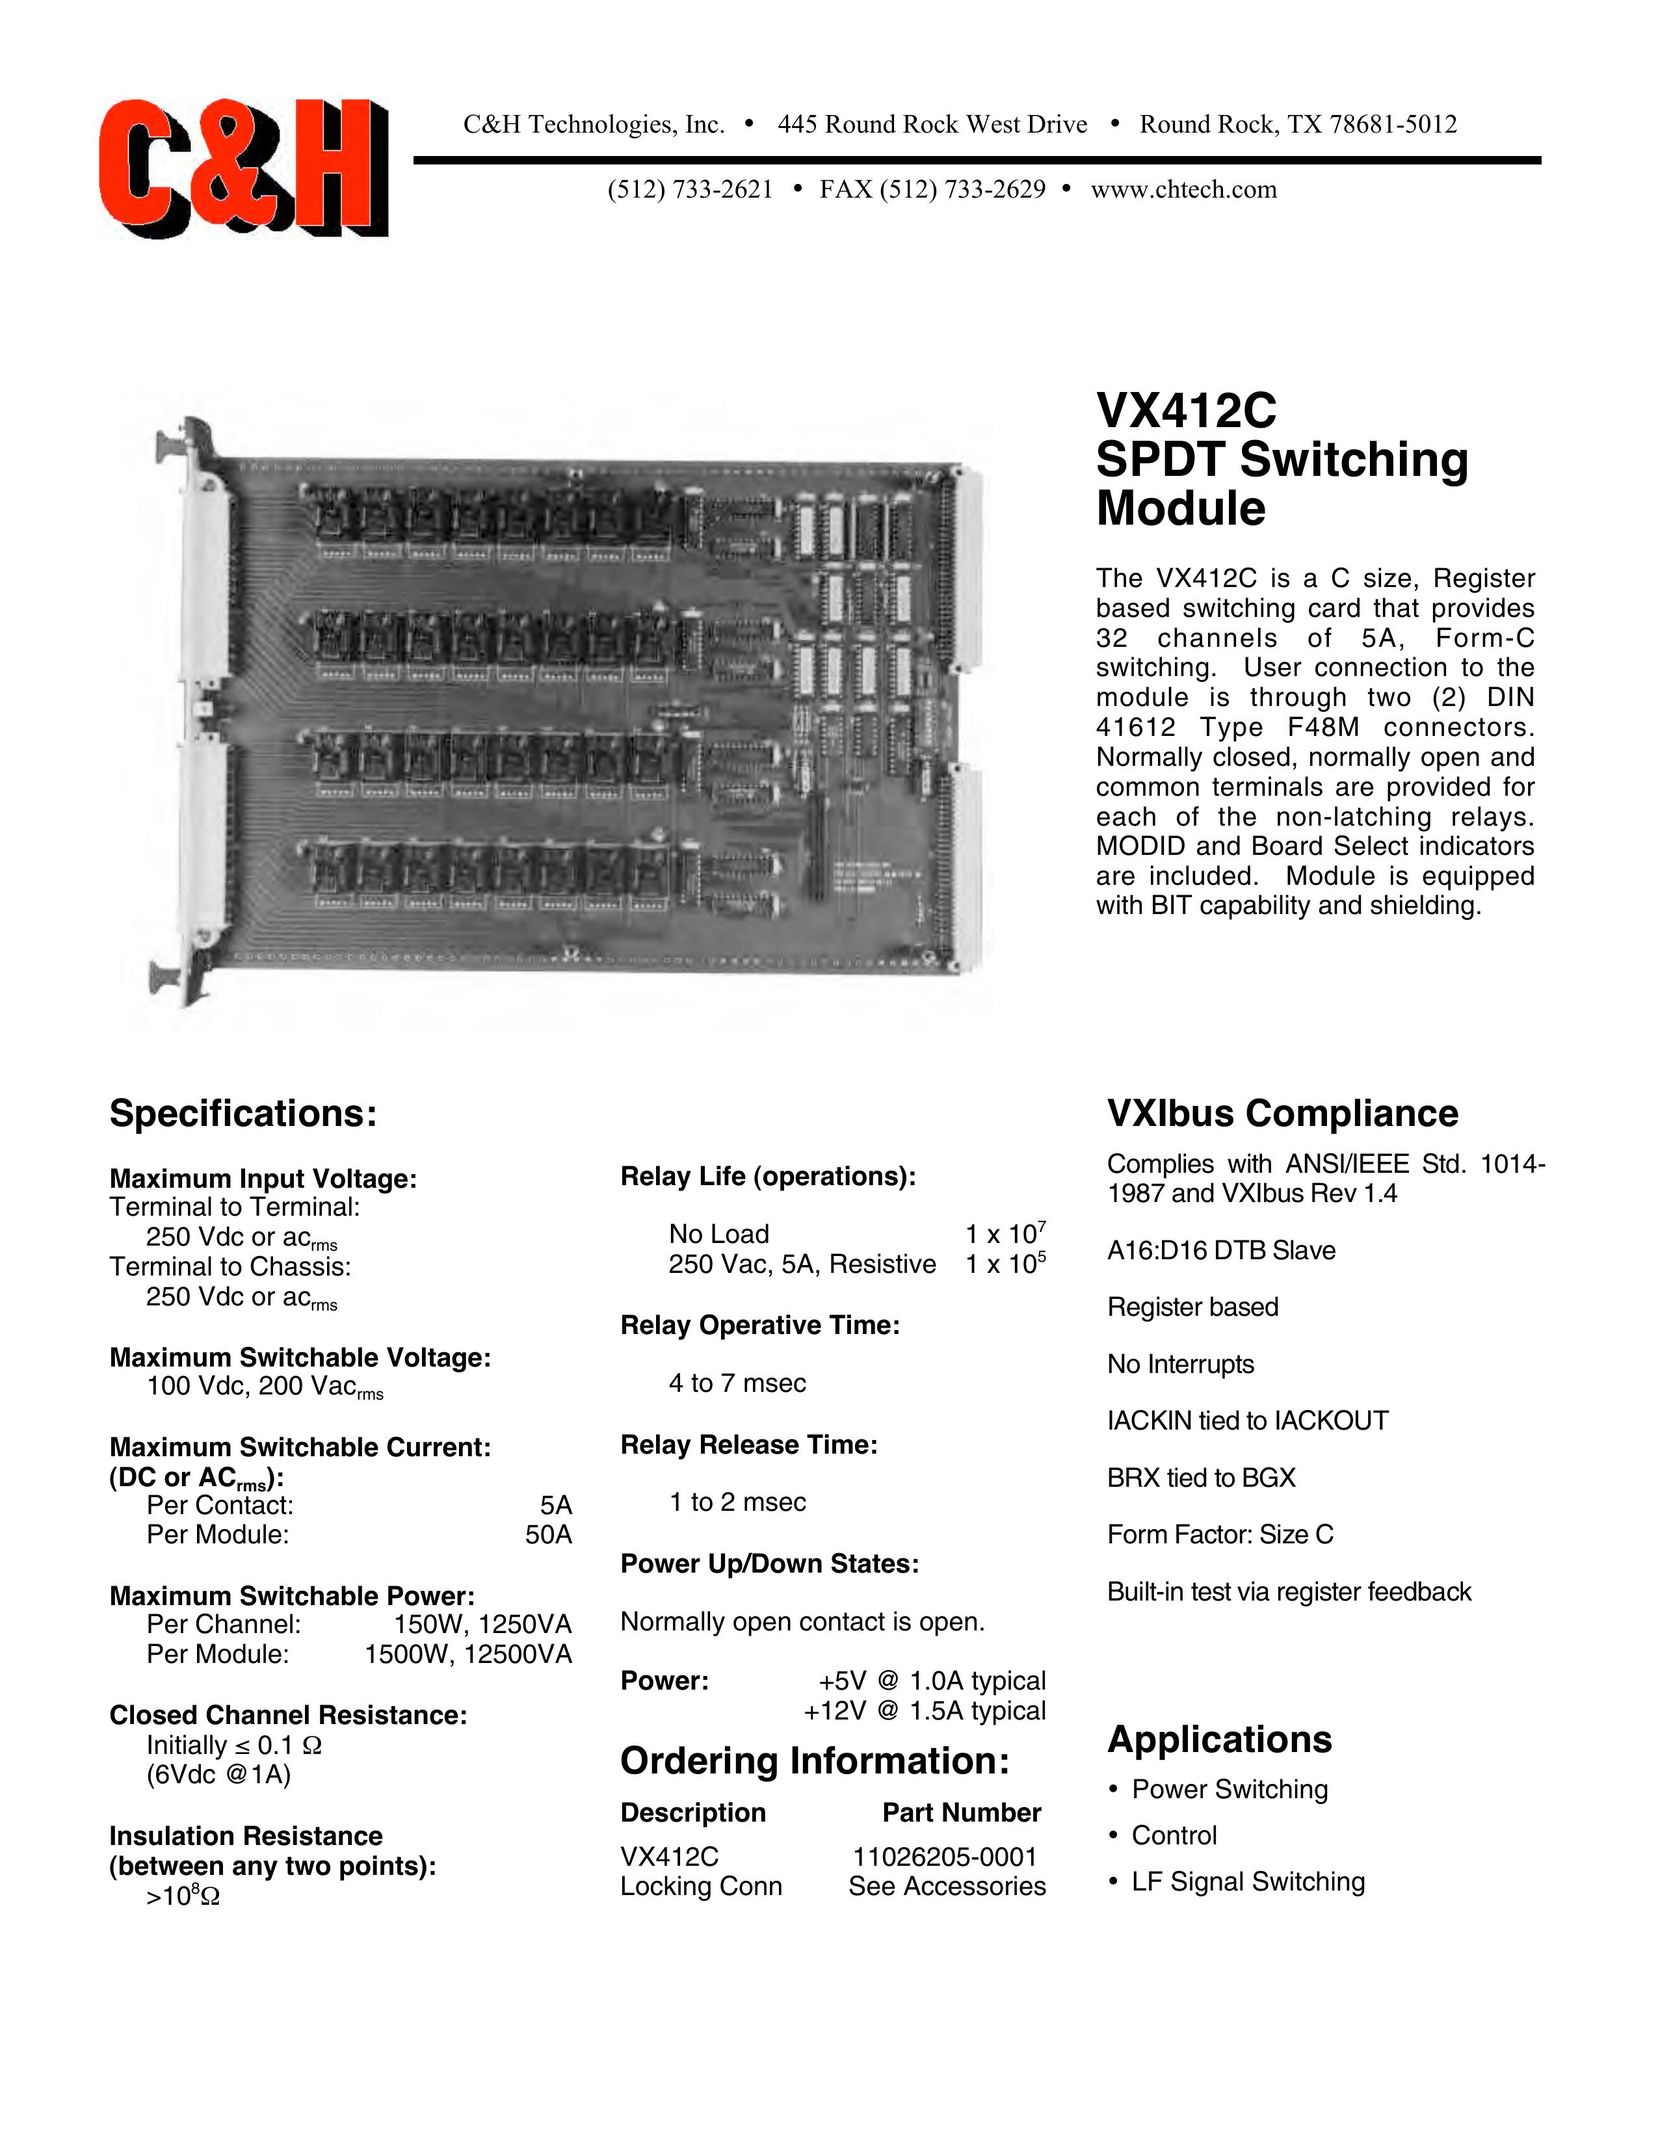 CH Tech VX412C Switch User Manual